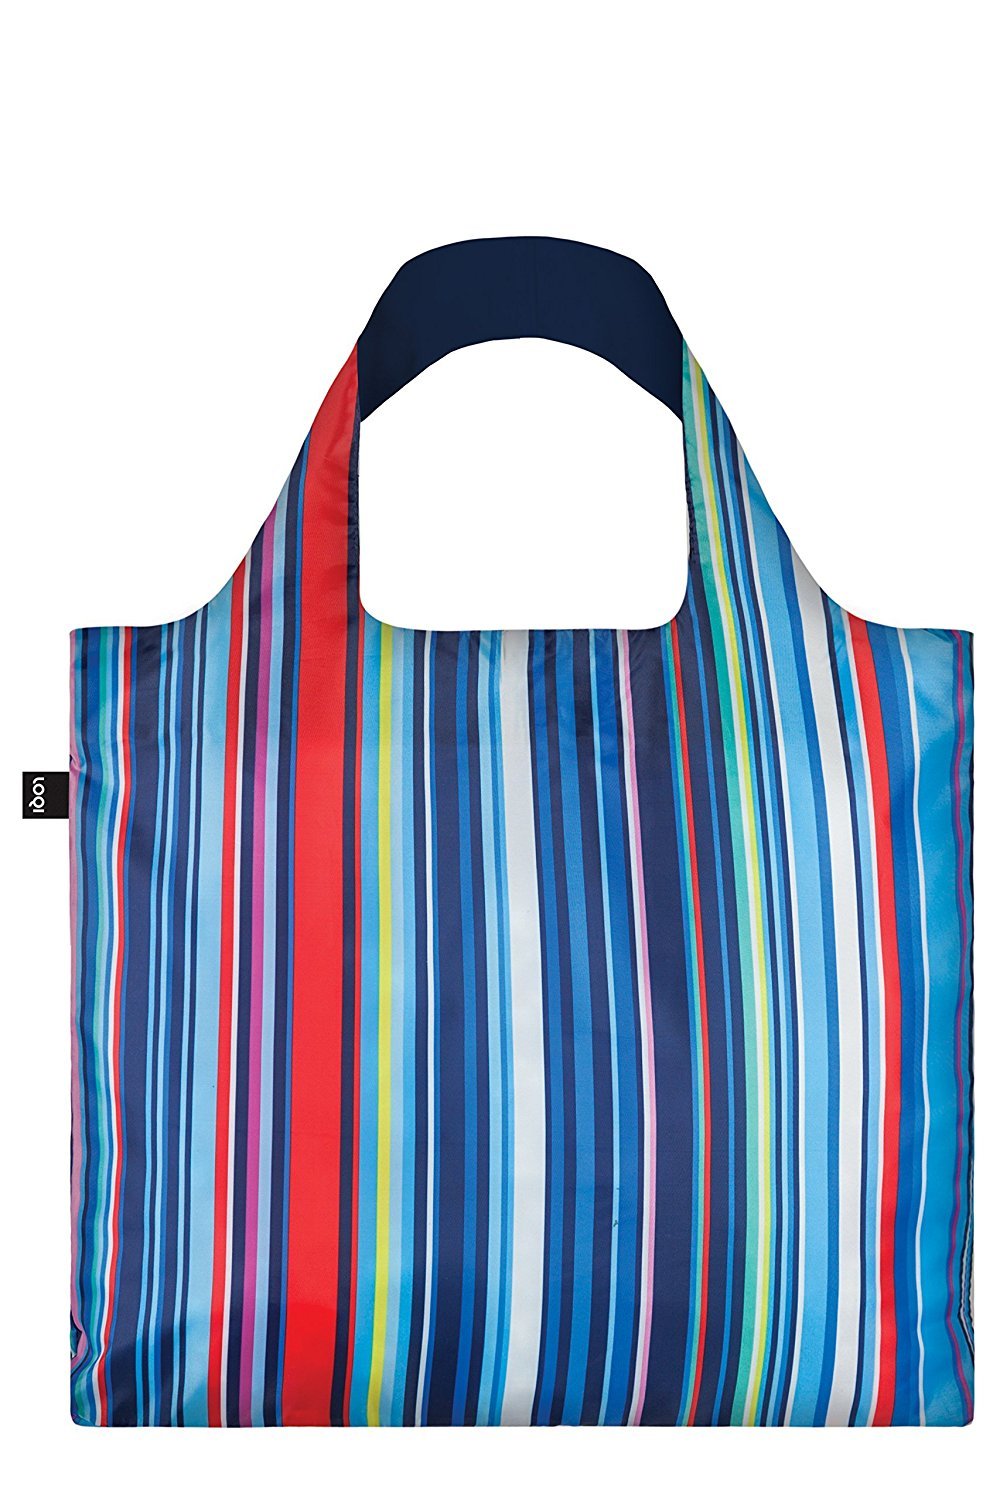 LOQI Nautical Stripes Reusable Shopping Bag